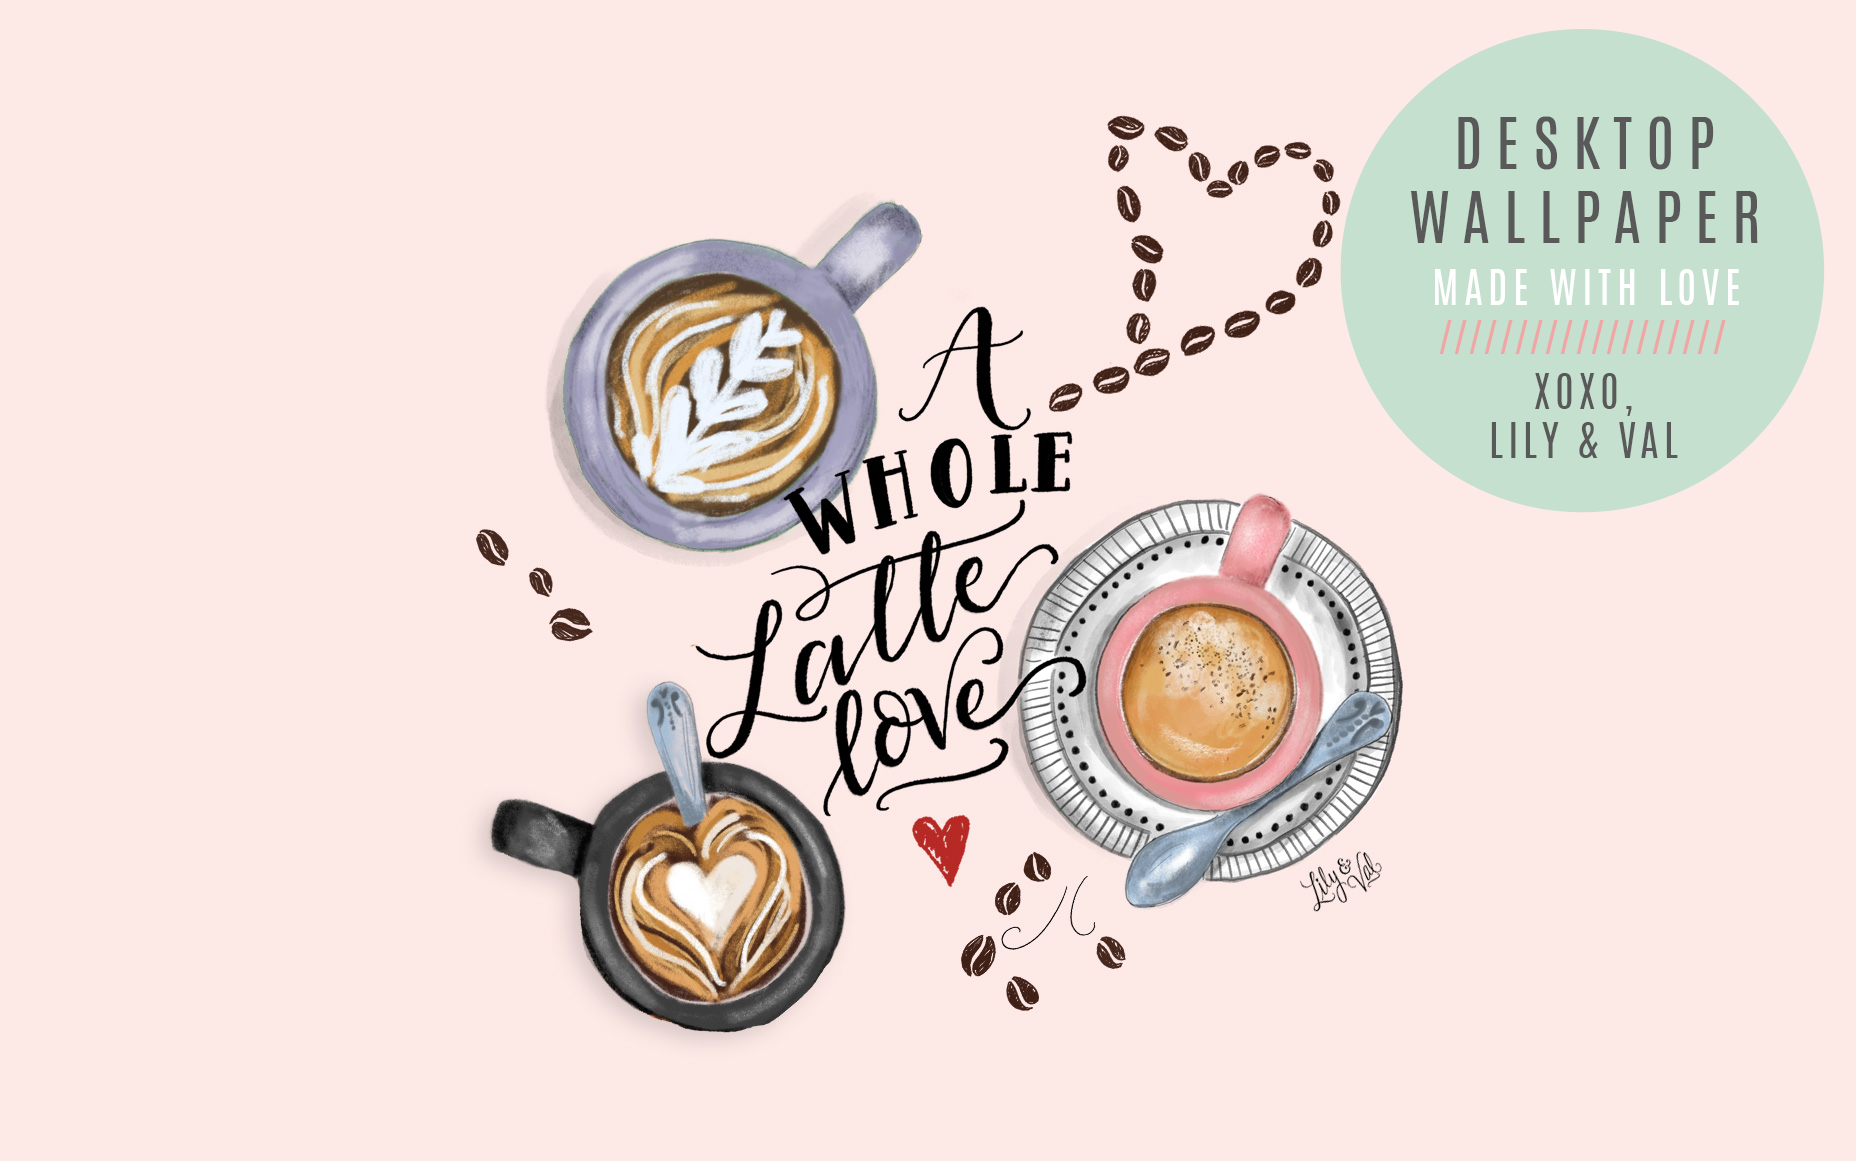 Whole Latte Love February Free Desktop Wallpaper Download & Val Living. Coffee wallpaper iphone, Free desktop wallpaper, Desktop wallpaper macbook